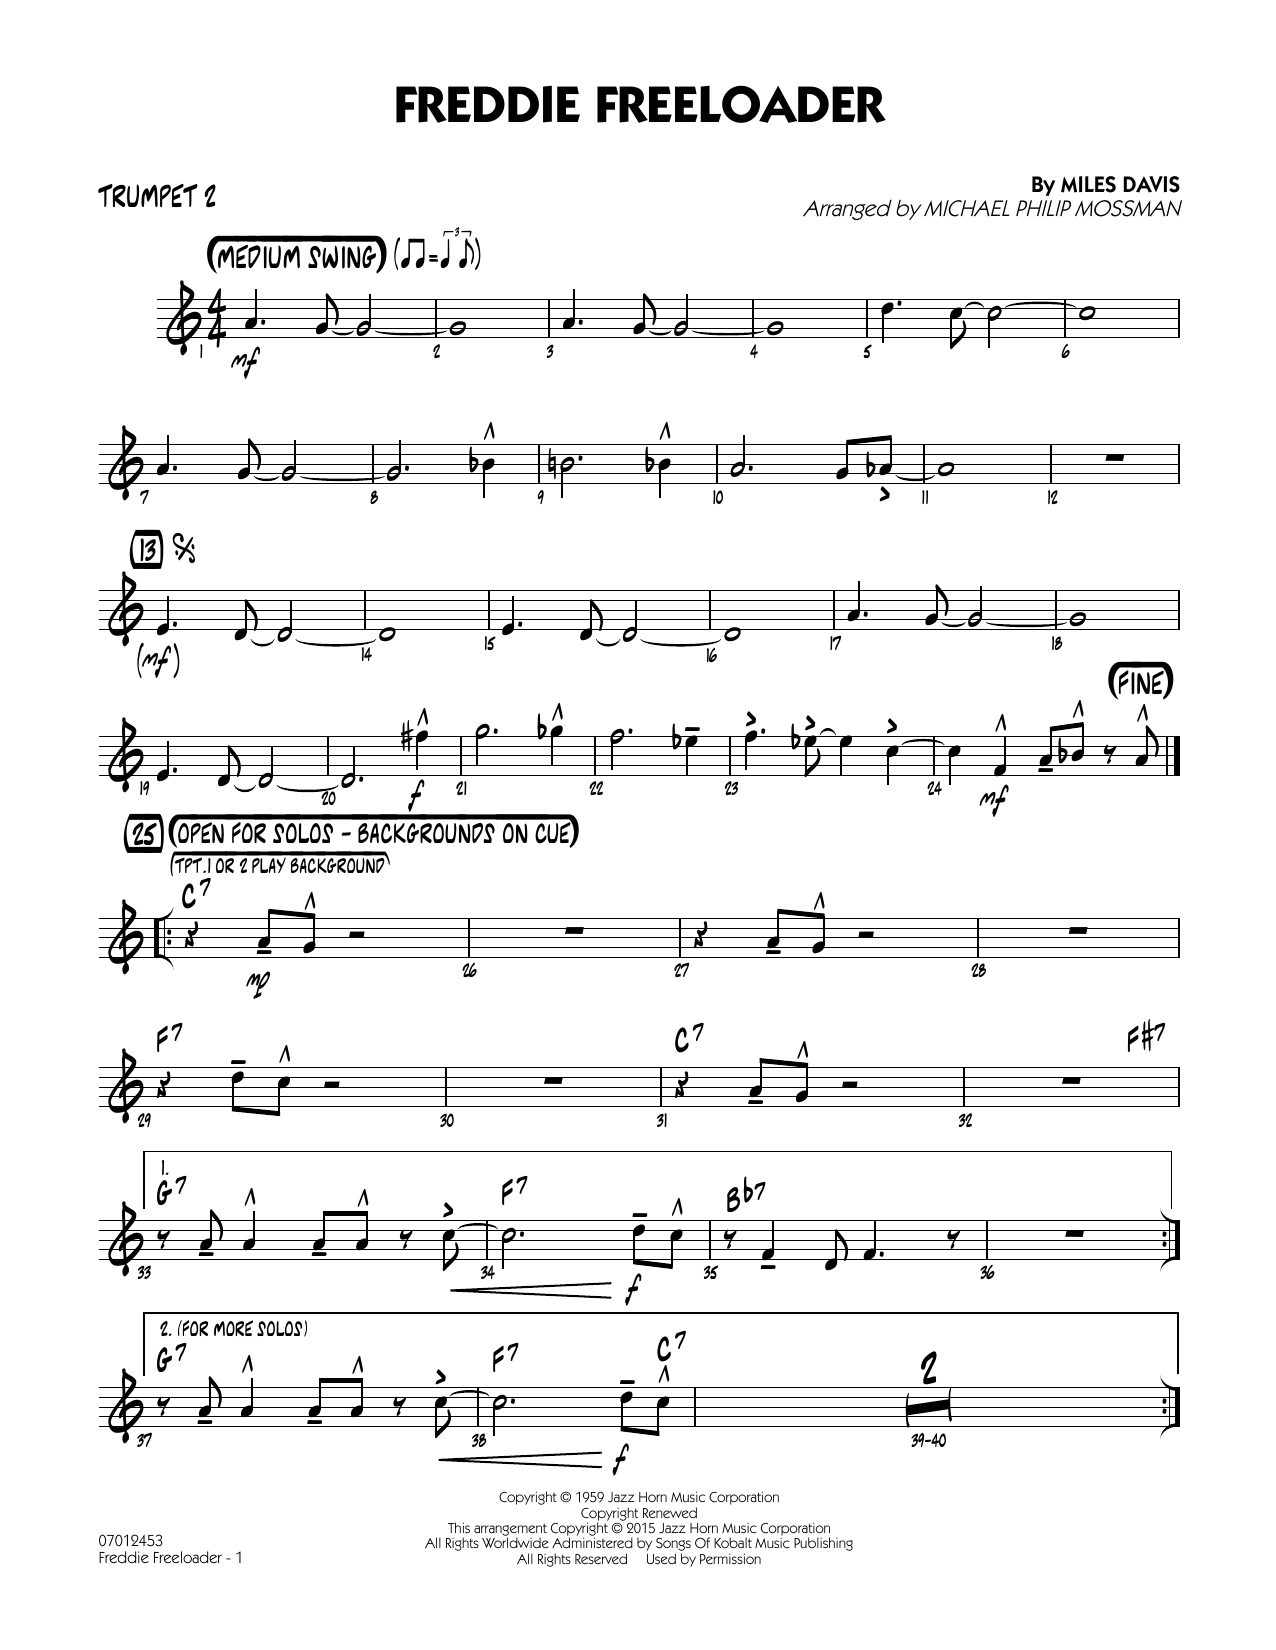 Michael Philip Mossman Freddie Freeloader - Trumpet 2 sheet music notes and chords. Download Printable PDF.